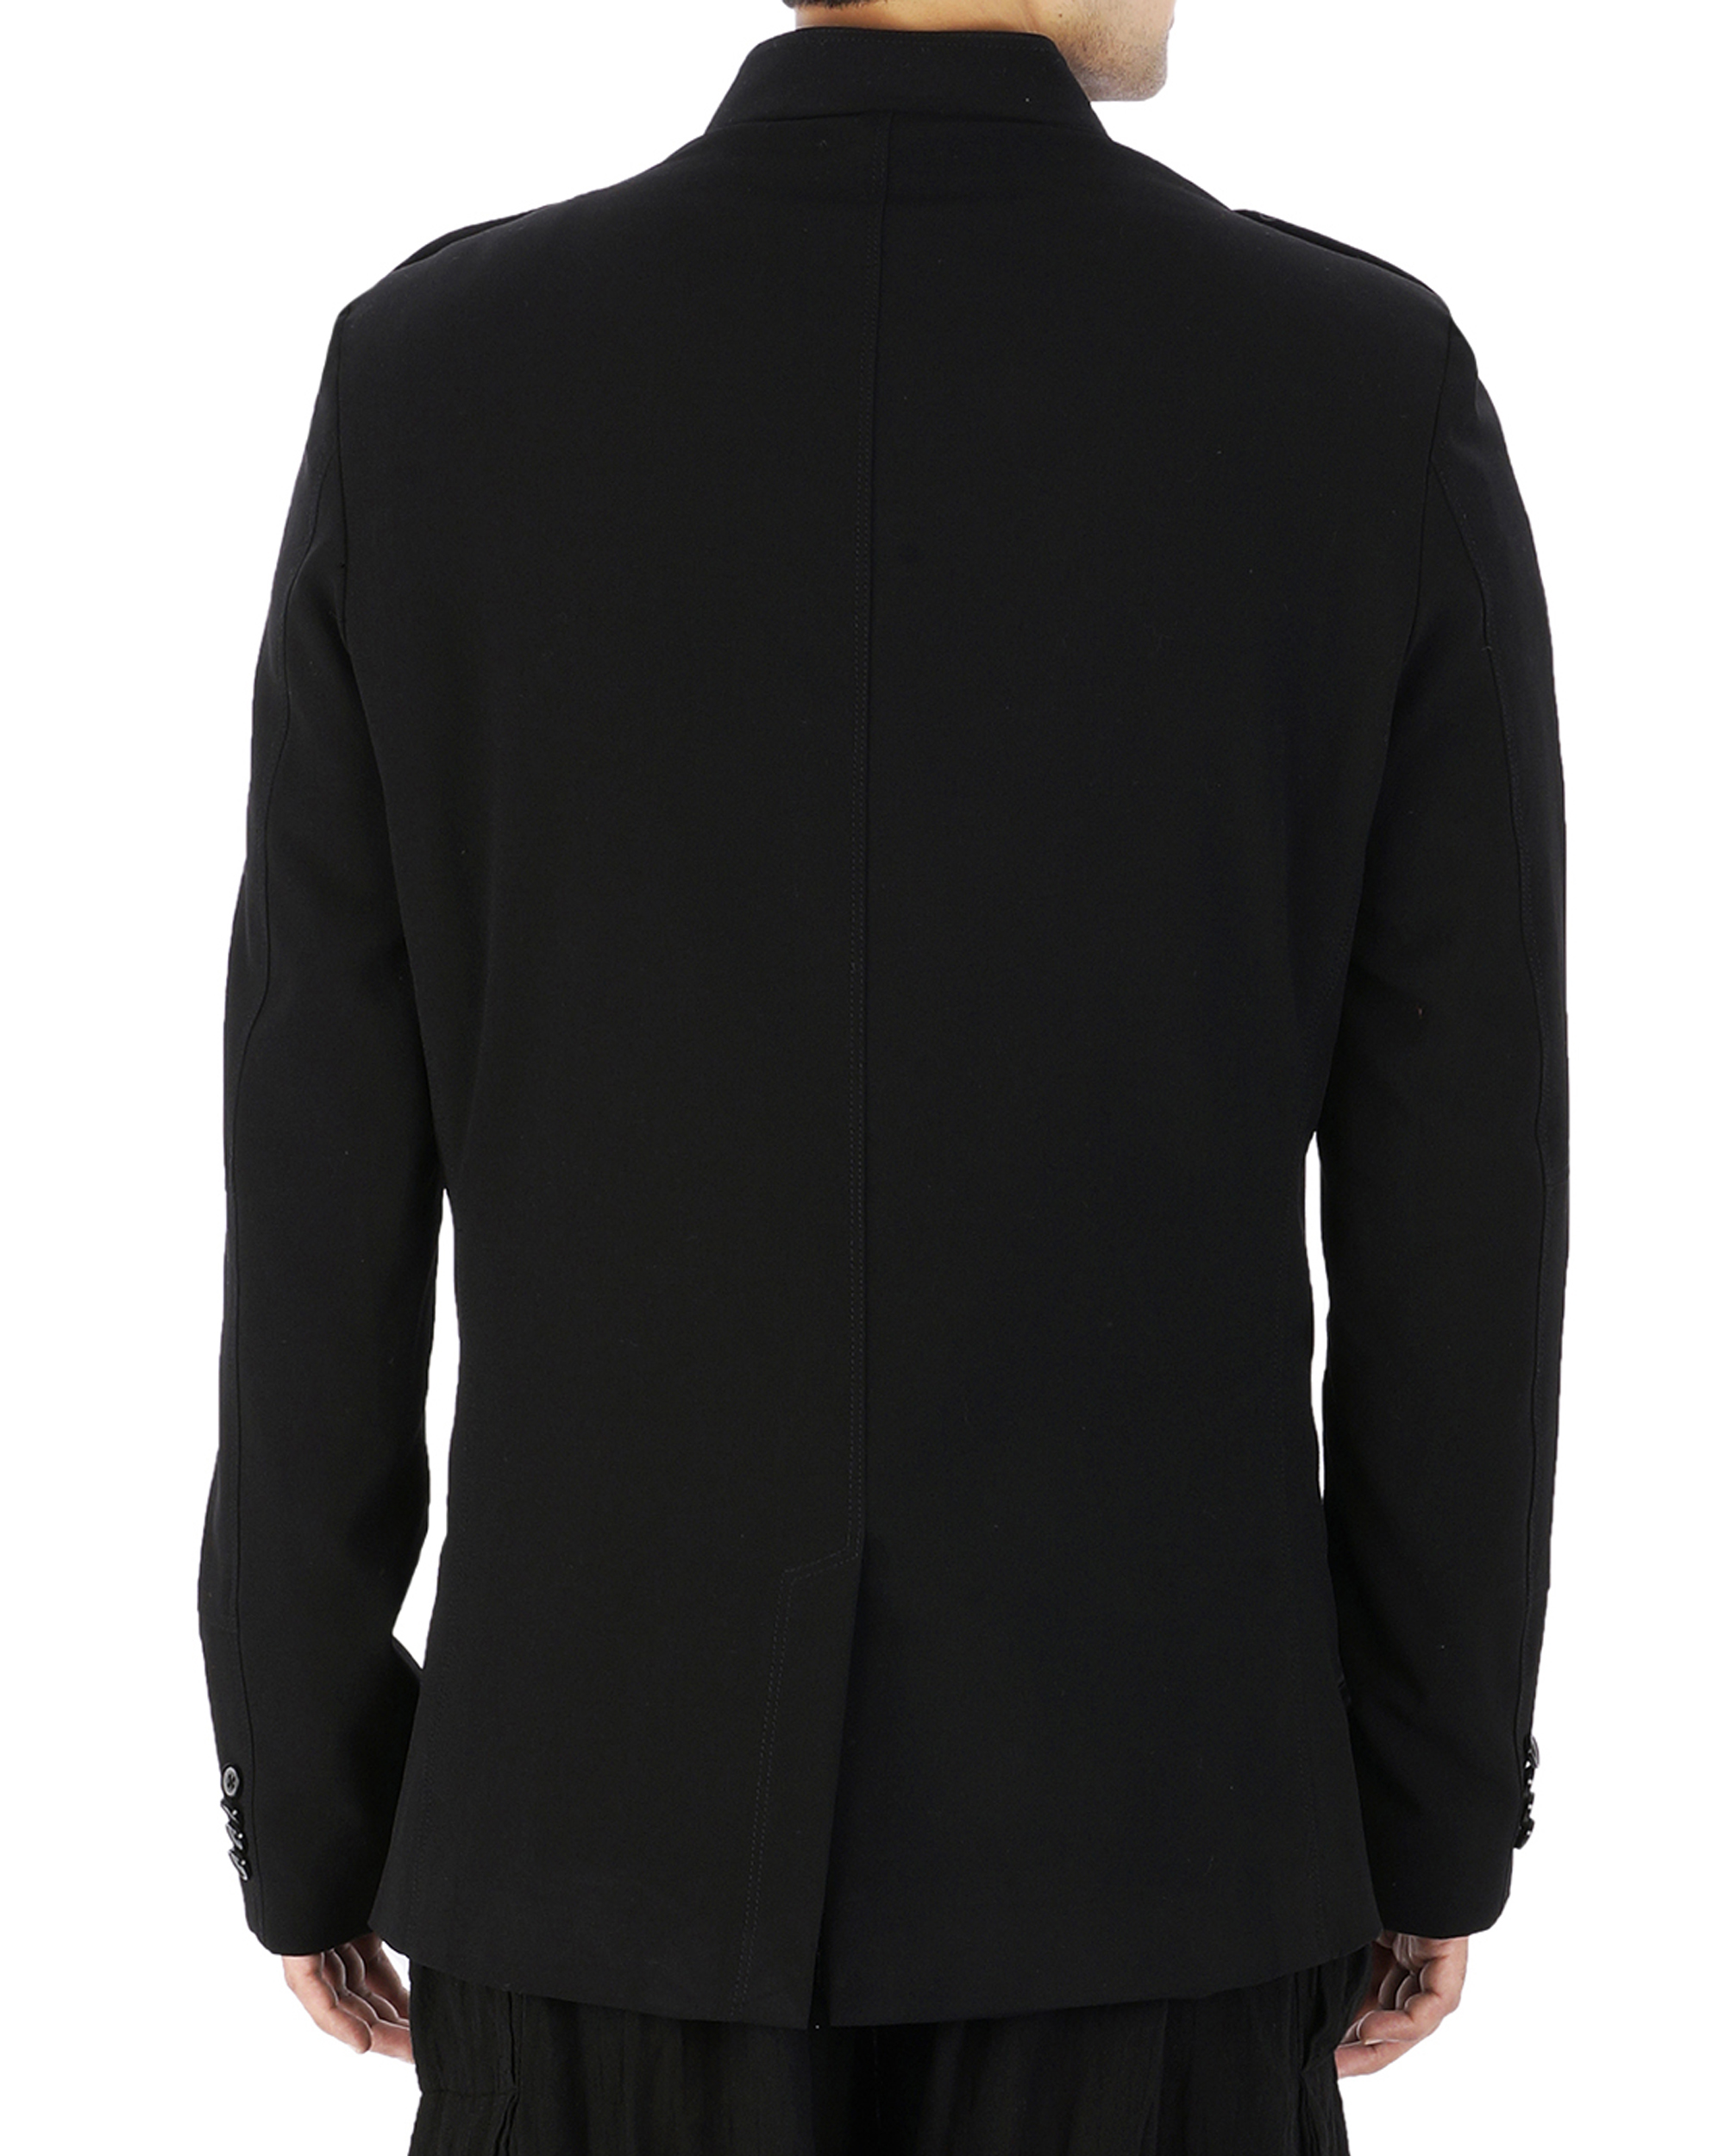 Black jacket by Asmita Marwa | The Secret Label